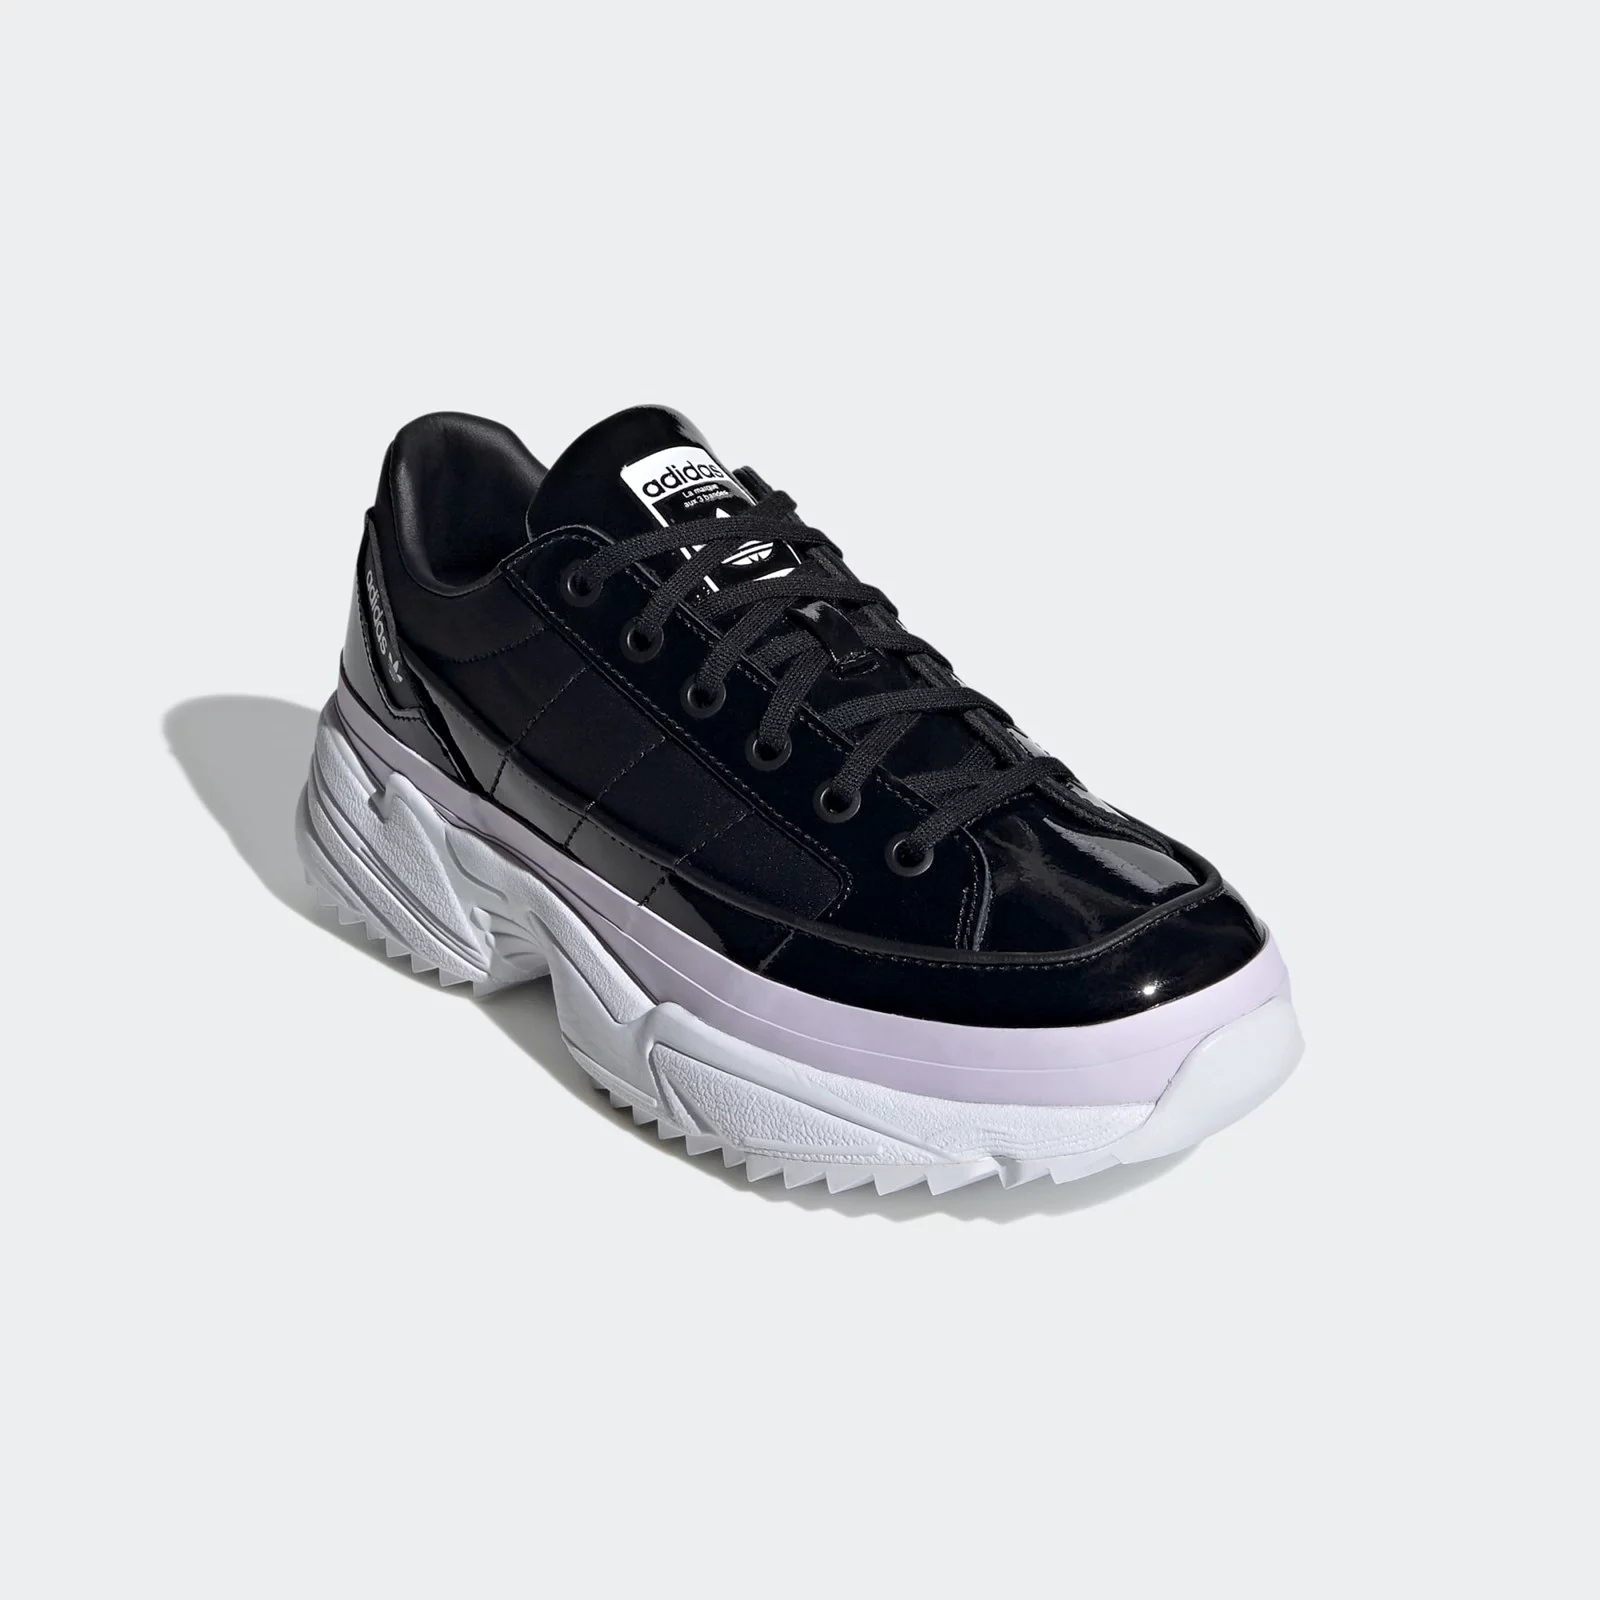  adidas Originals Kiellor W Trainers Women Black - 5.5 - Low  Top Trainers Shoes